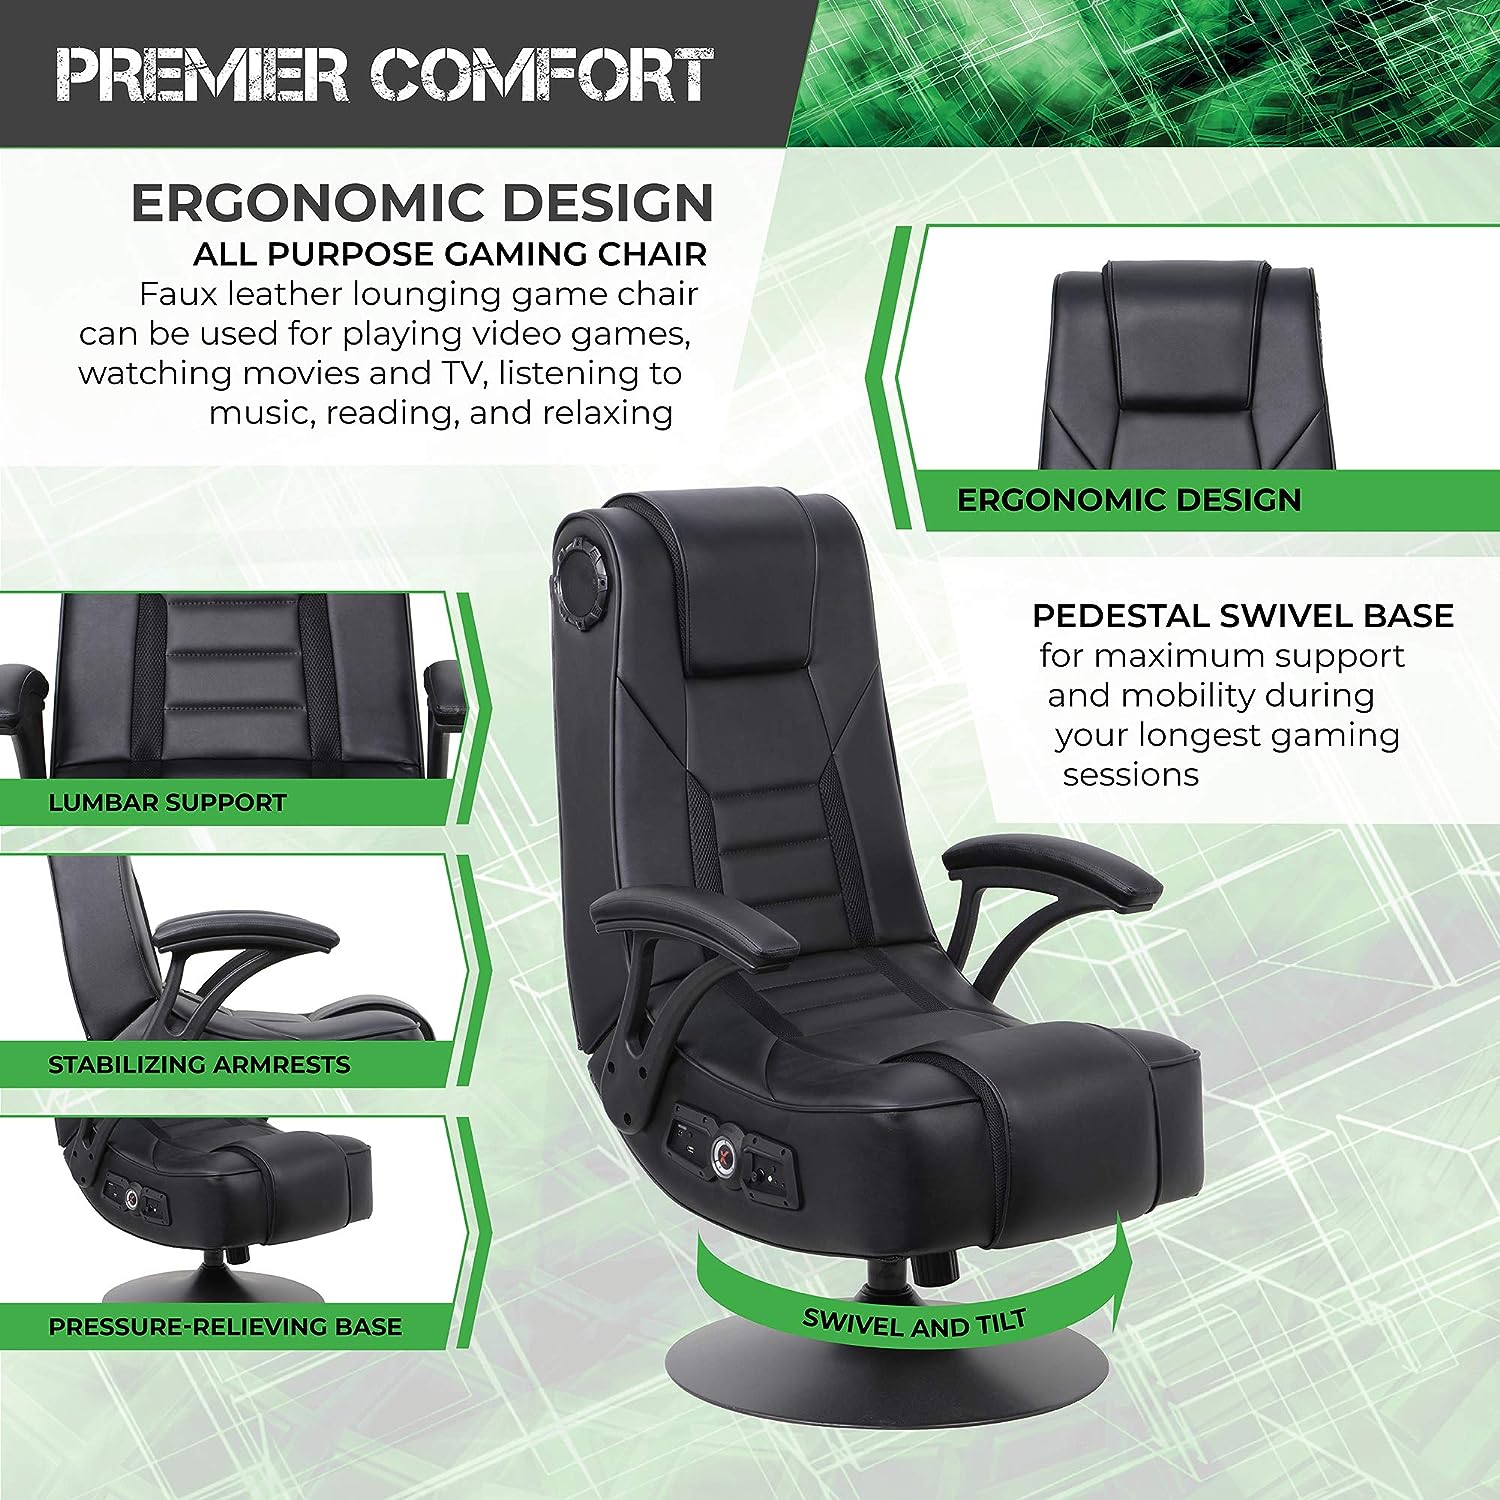 X Rocker Mammoth Pedestal Gaming Chair Review